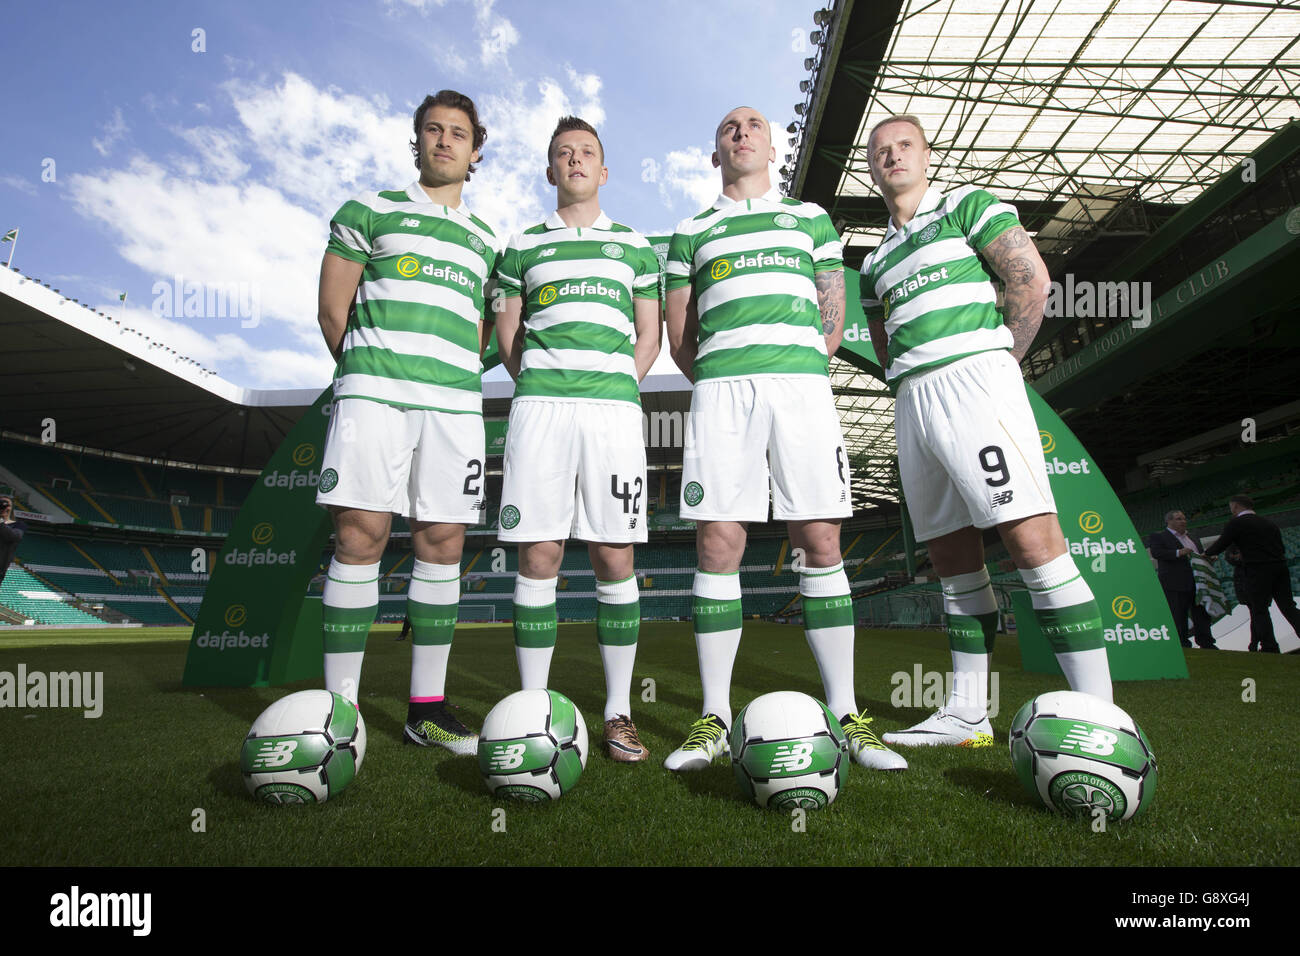 Lennoxtown, Scotland. 05th Aug, 2013. Celtic FC launch their new